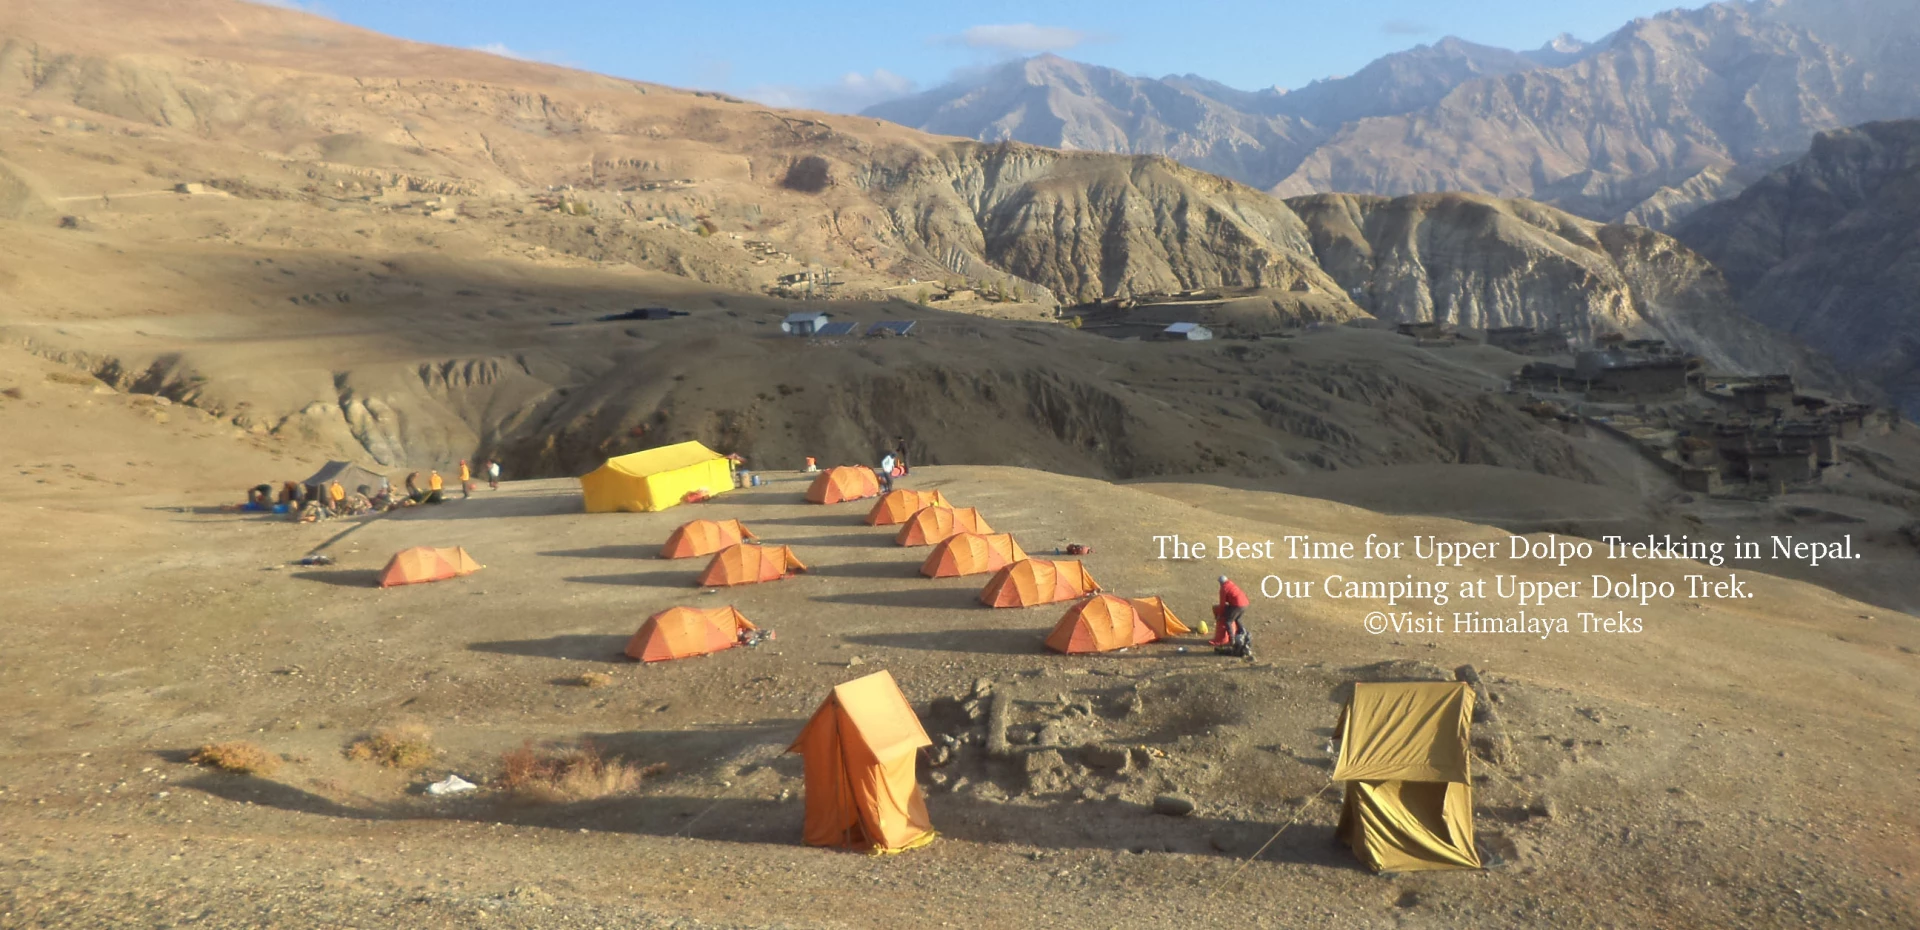 The Best Time for Upper Dolpo Trekking in Nepal